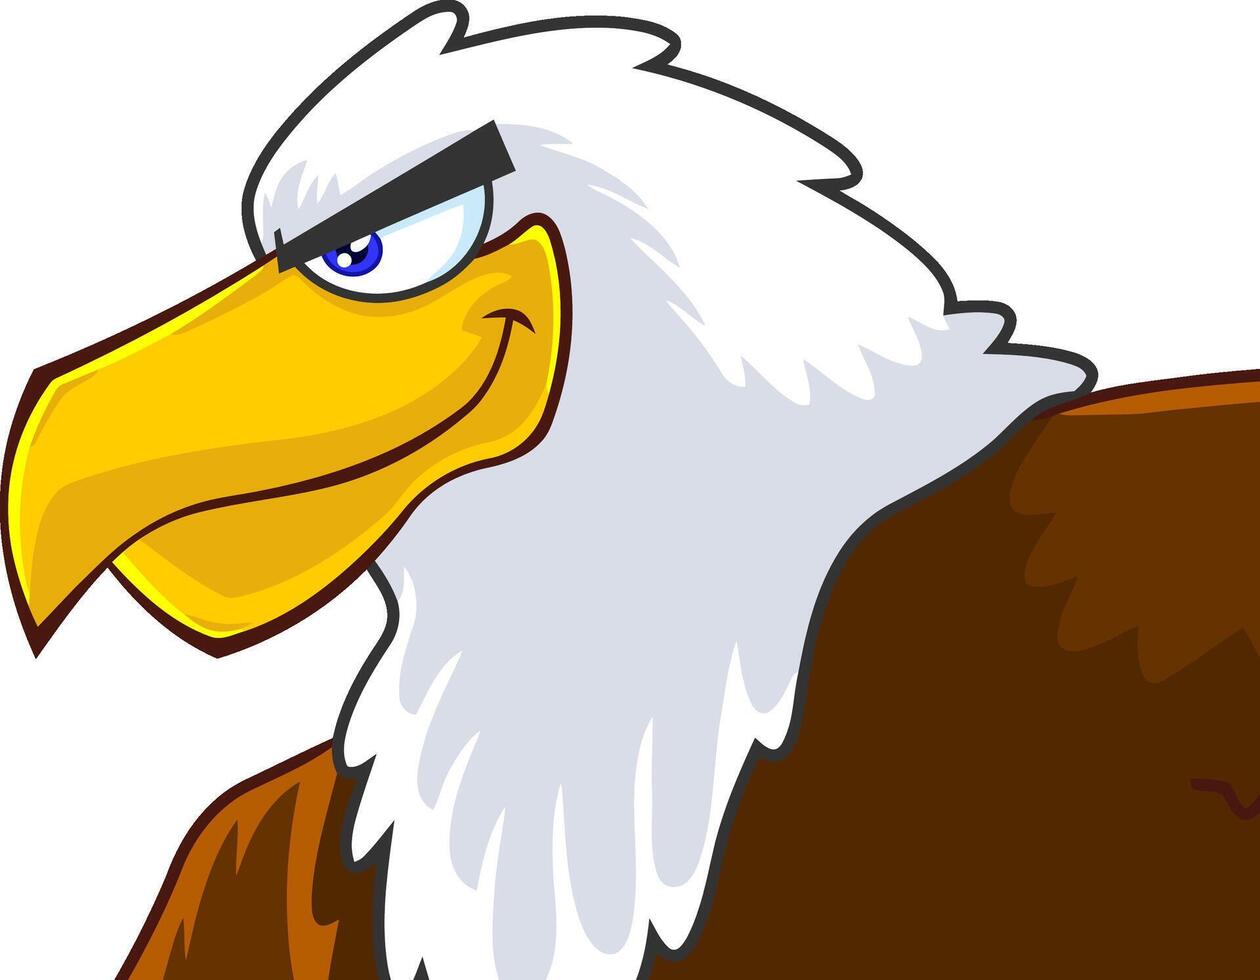 Eagle Bird Head Cartoon Character Vector Illustration Isolated On White Background